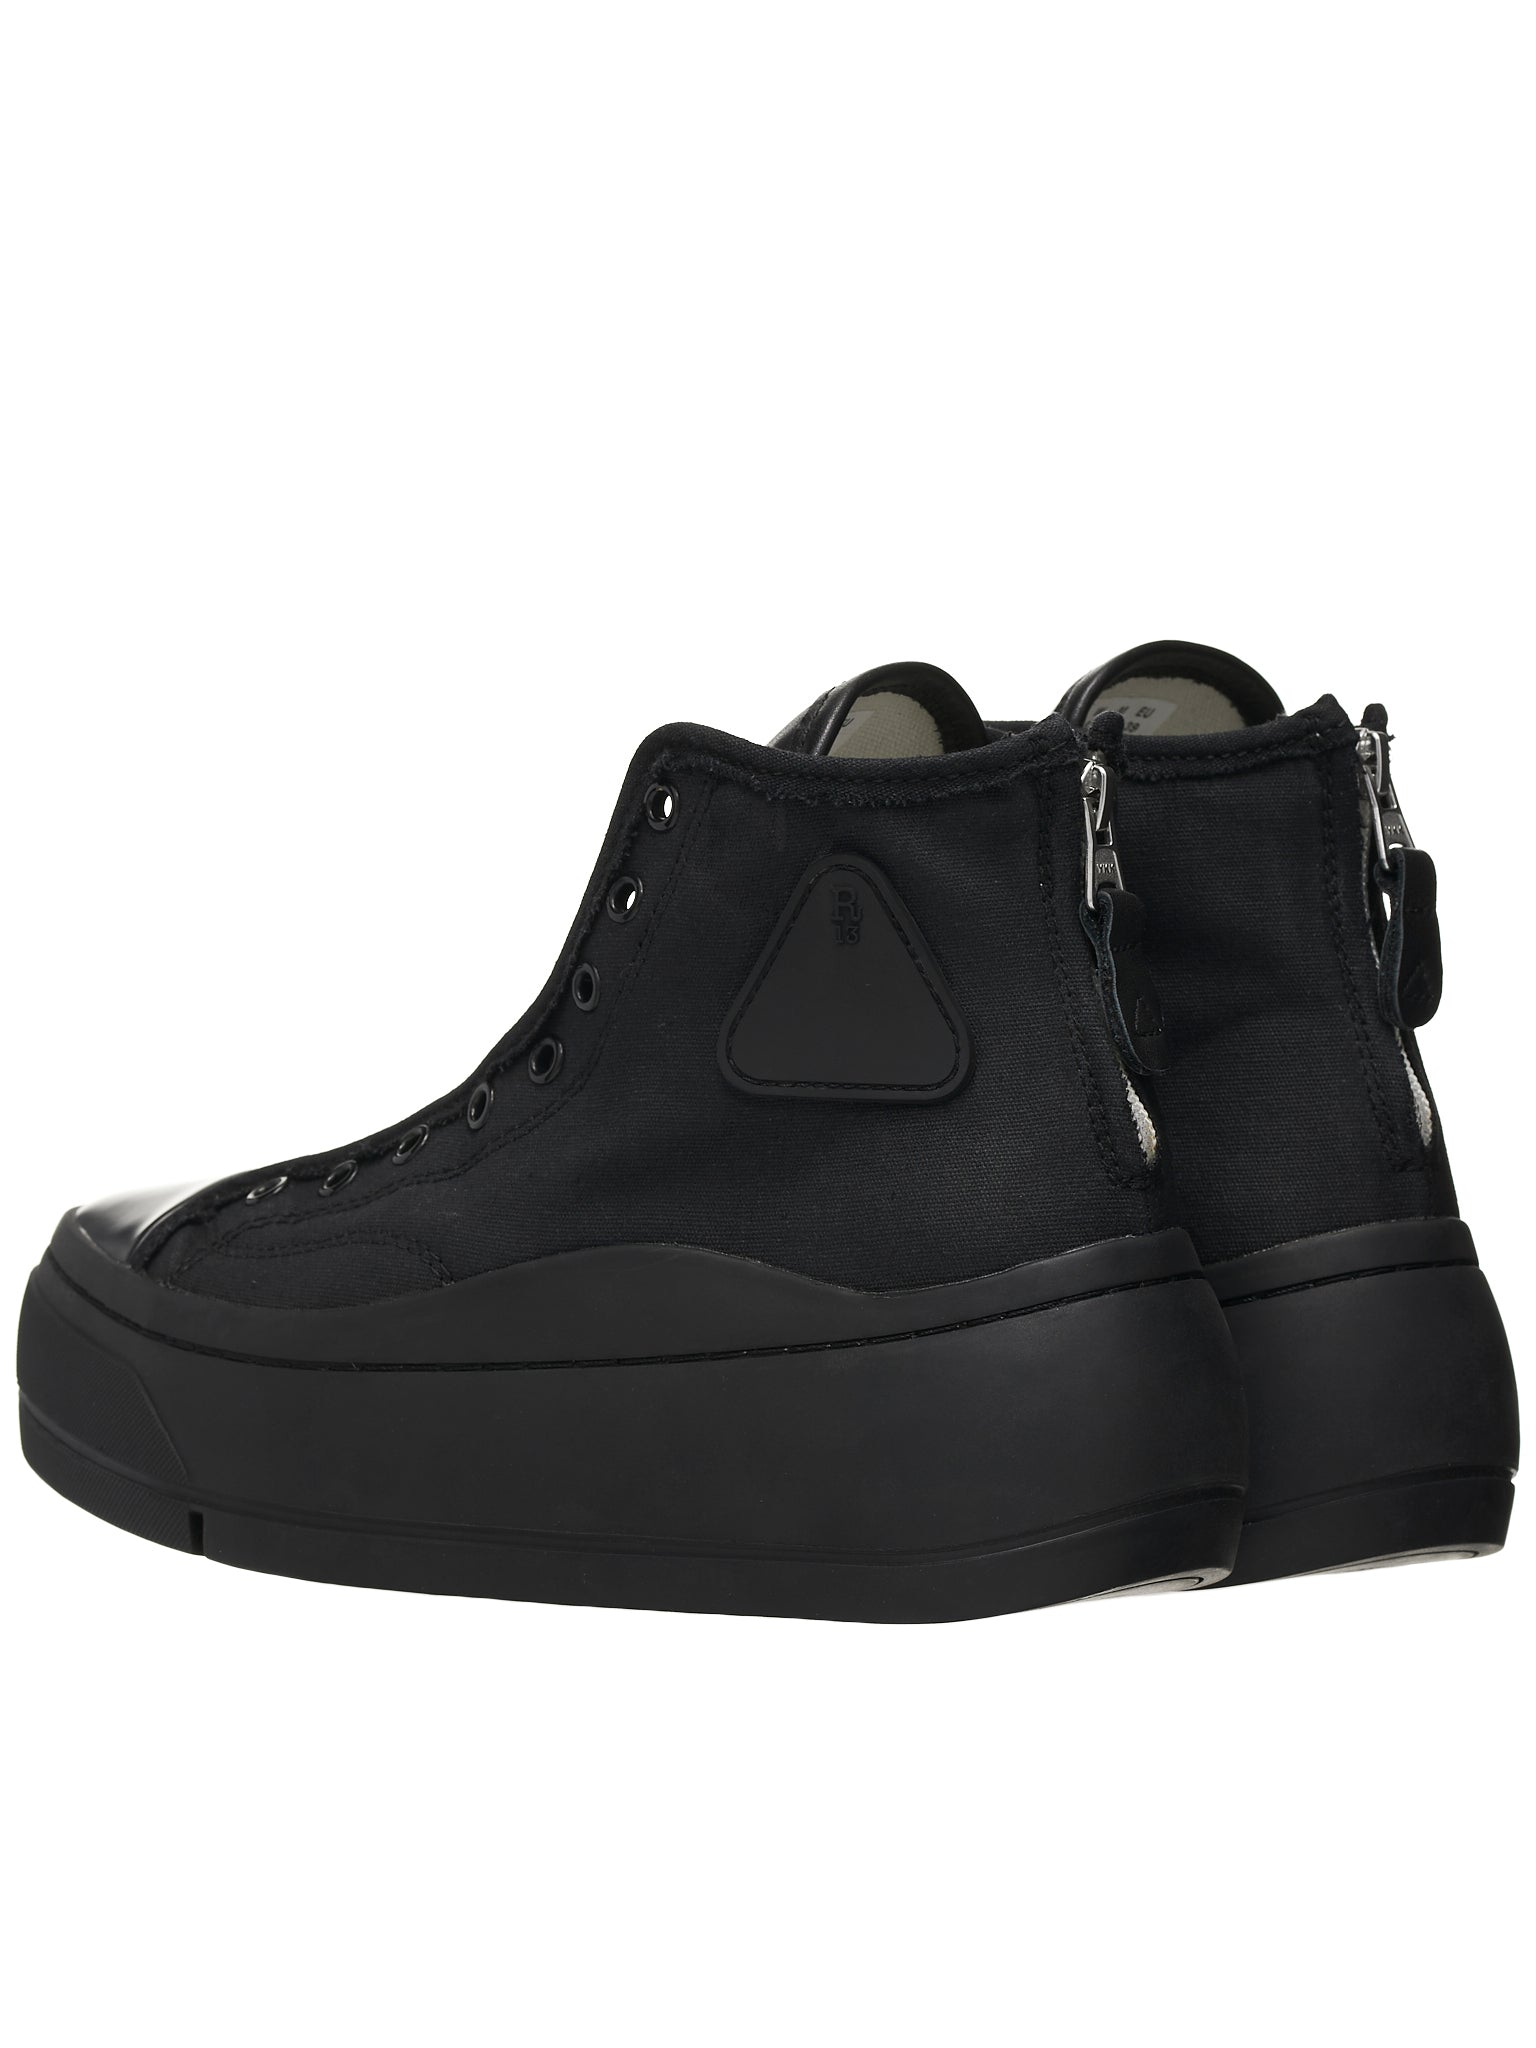 Lace Free Kurt Sneakers (R13S5032-001-BLACK)